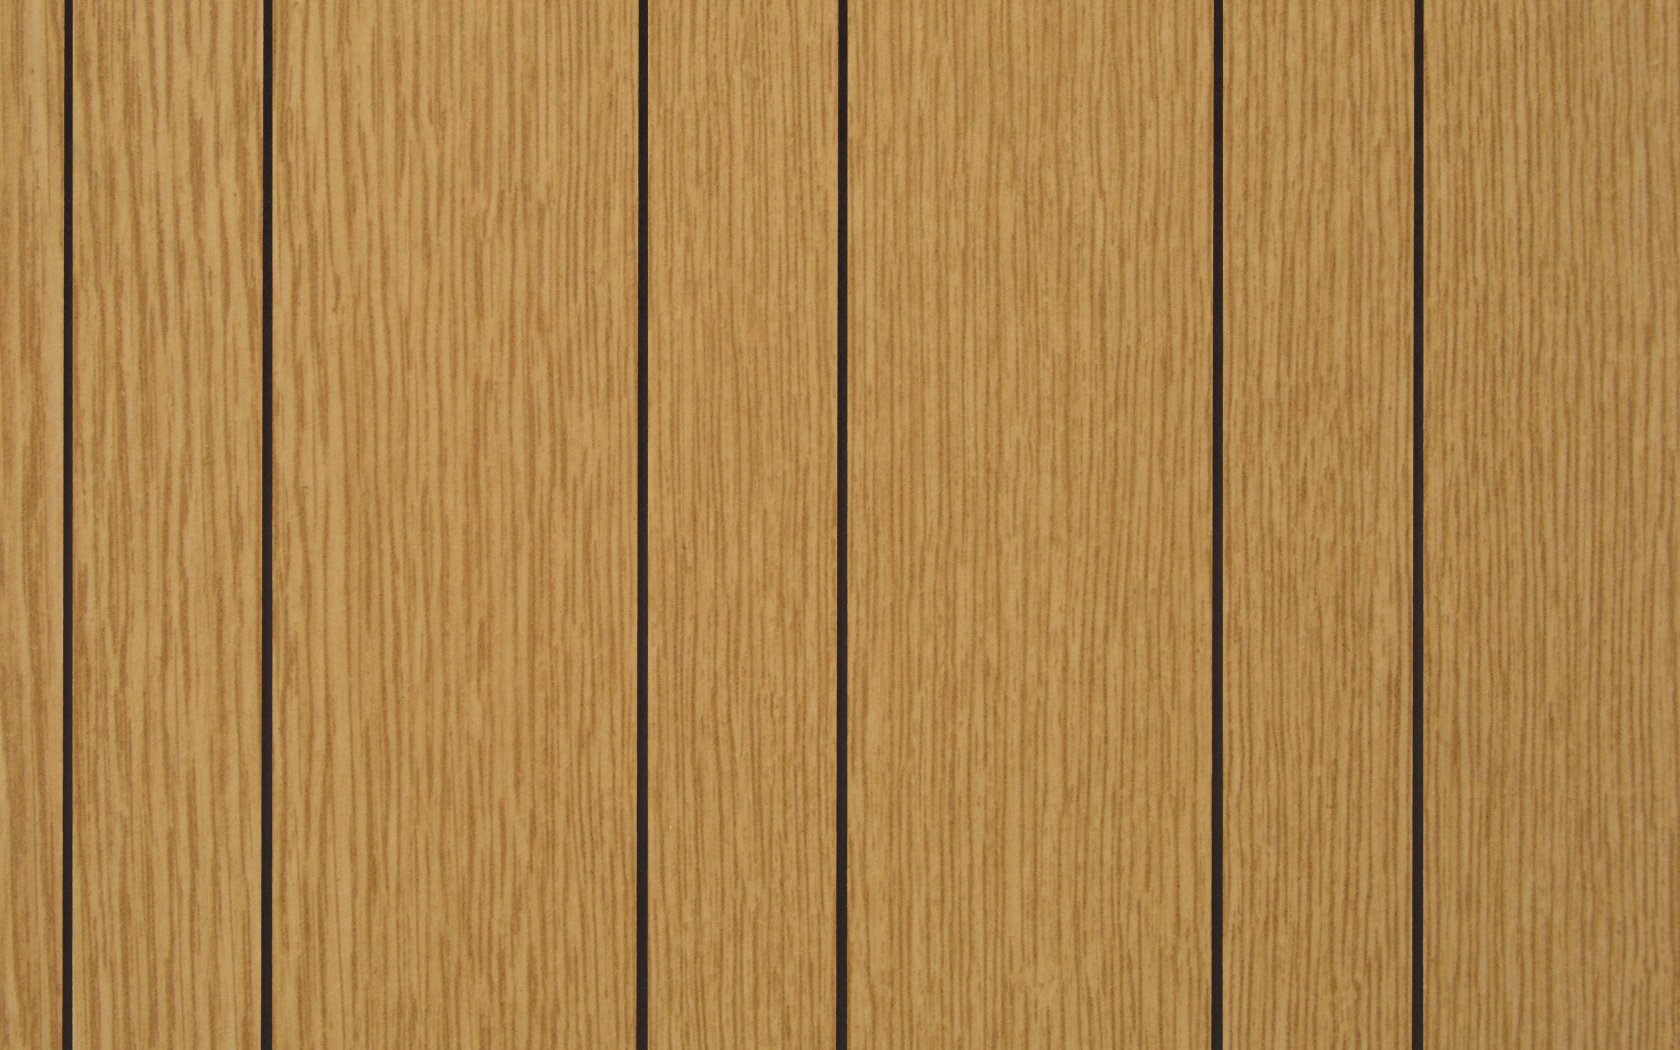 Wall Panels That Look Like Wood